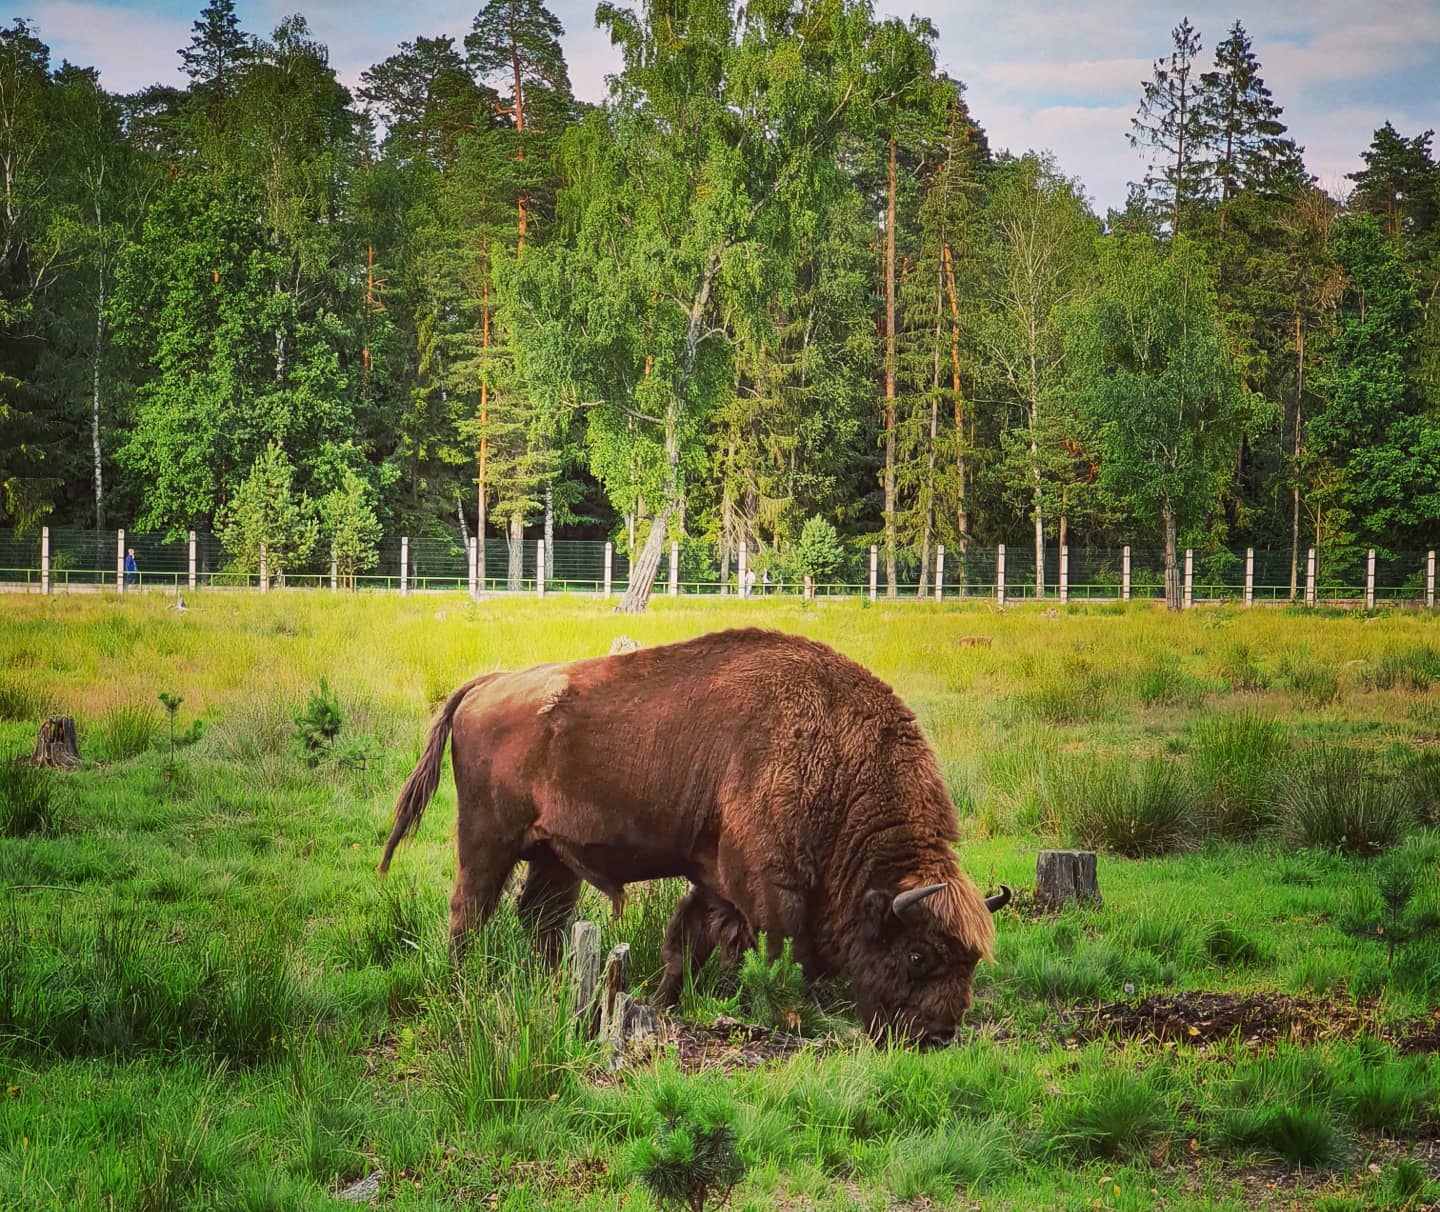 The bison grazes. National Park Belovezhskaya Pushcha. Summer 2020 Photo by A.Basak